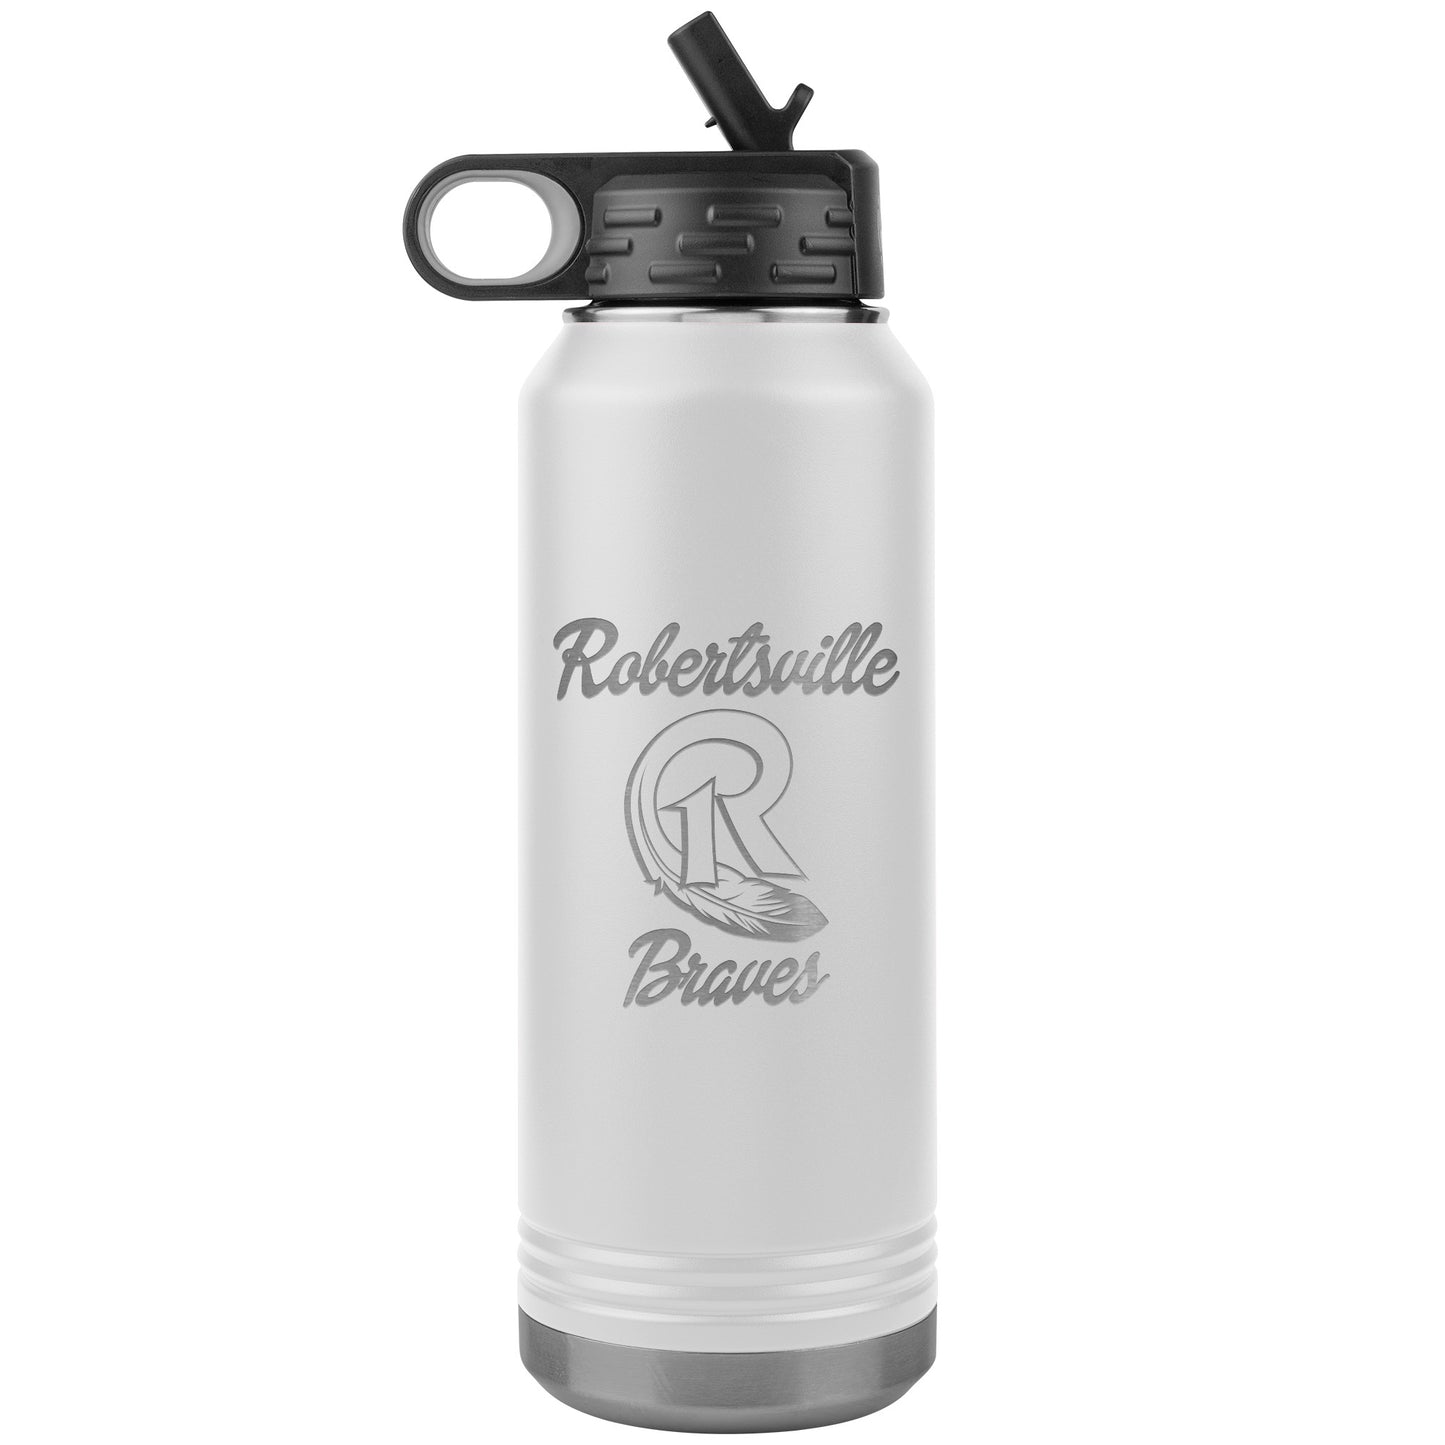 Robertsville Braves - 32oz Insulated Water Bottle